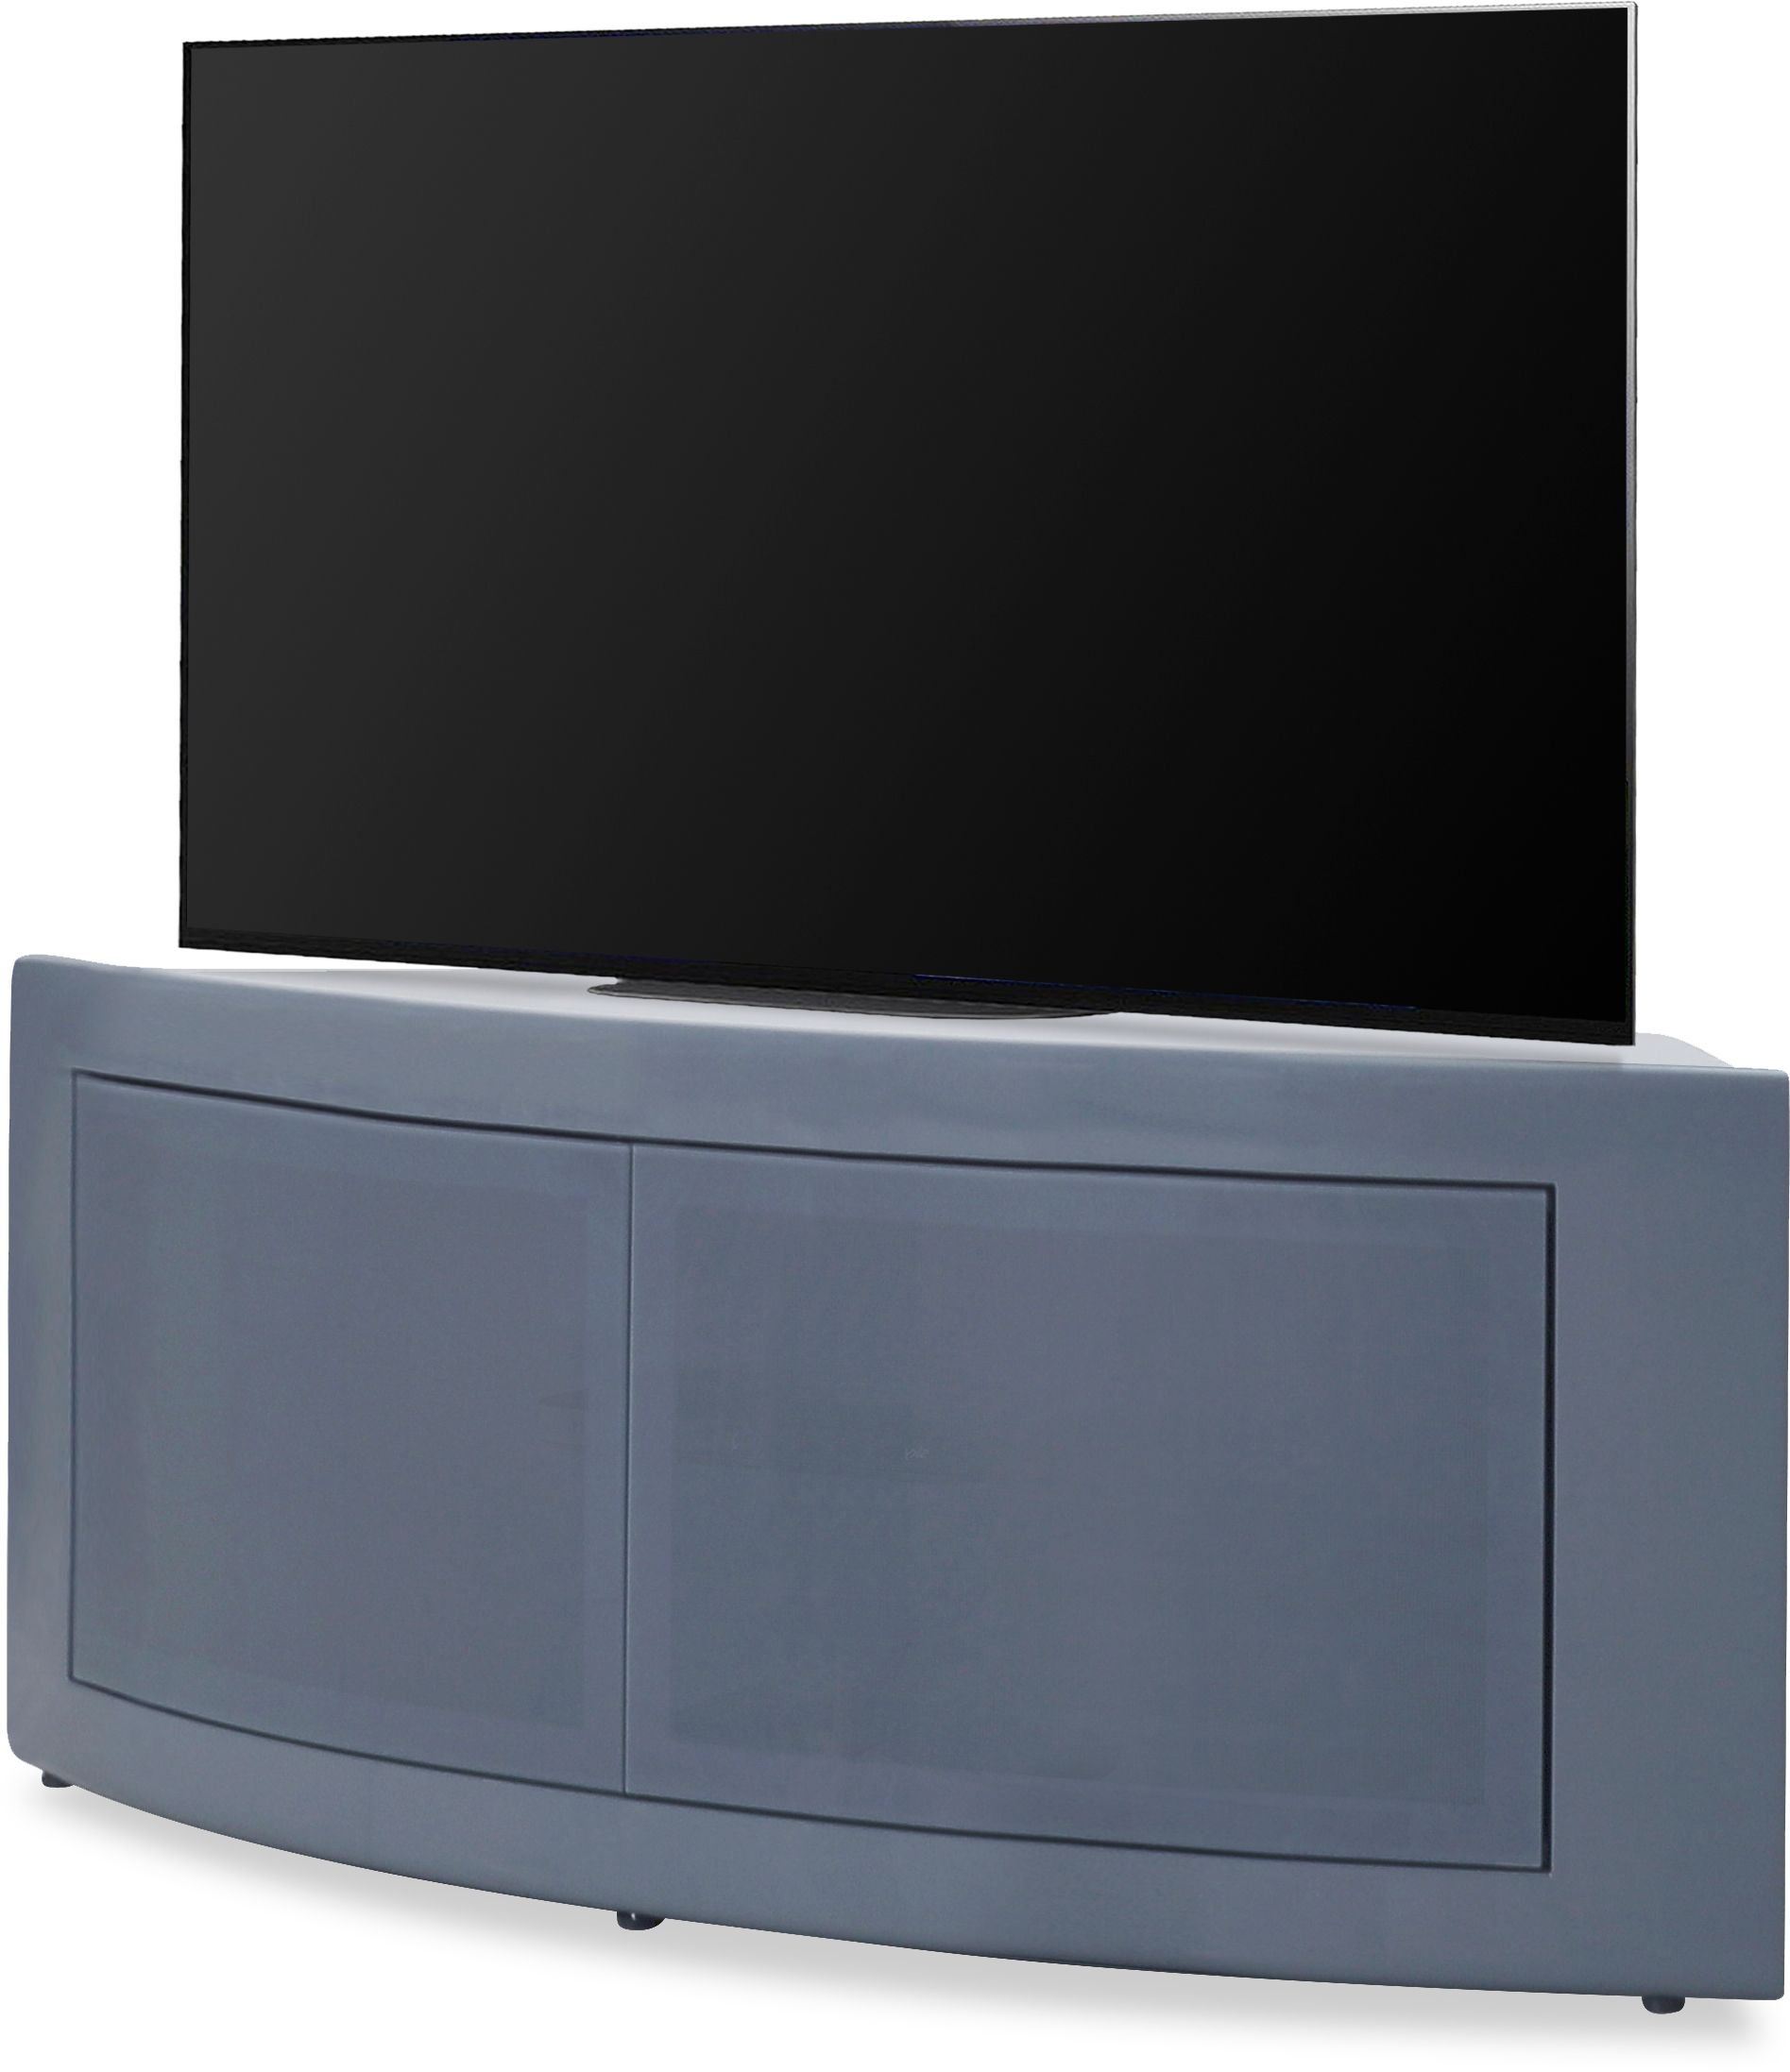 Centurion Supports Pangea Grey Beam Thru Curved Tru Corner Throughout Beam Through Tv Stand (View 10 of 15)